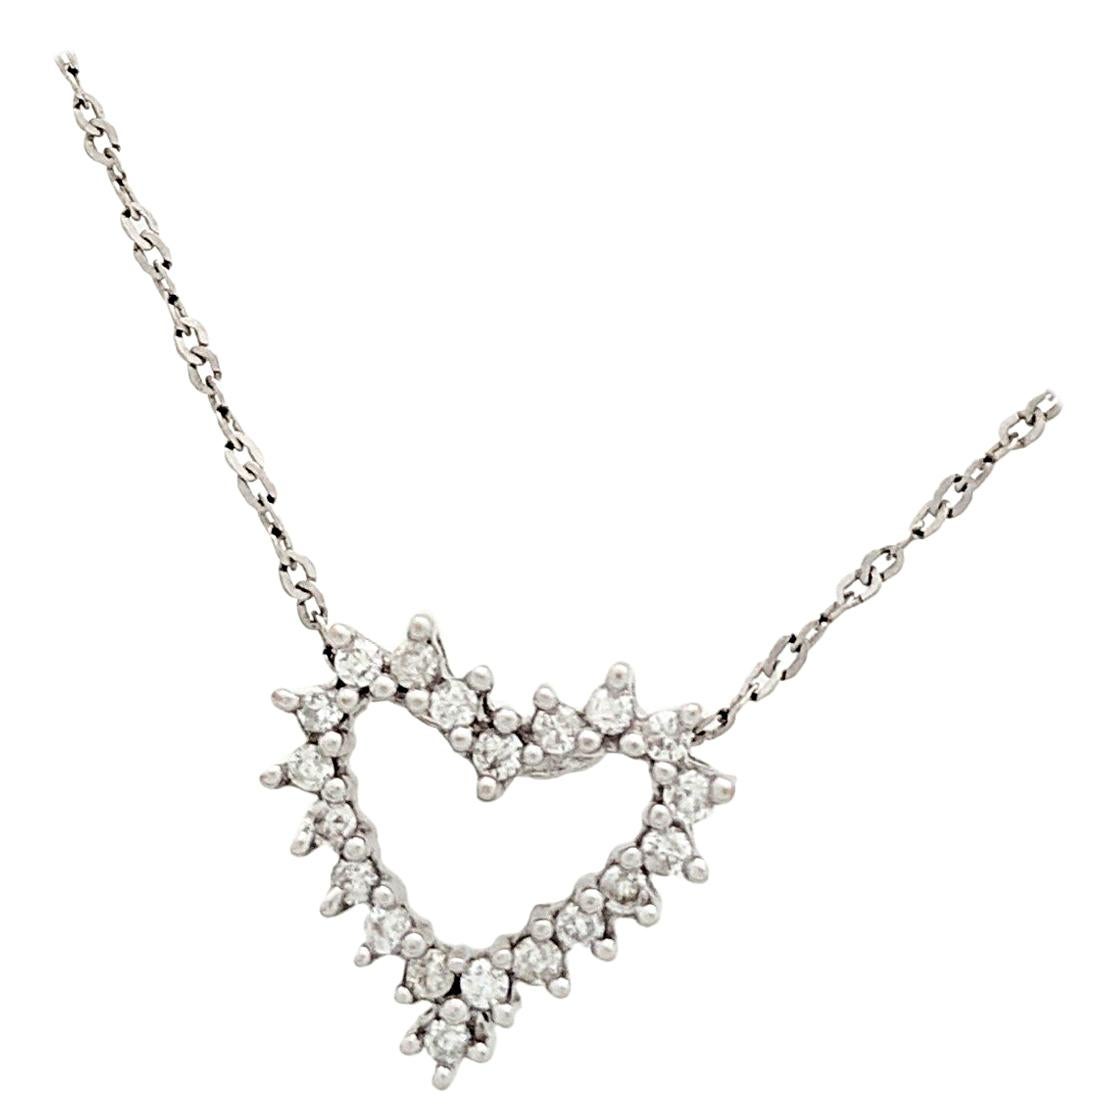 14 Karat White Gold Diamond Heart Pendant Necklace